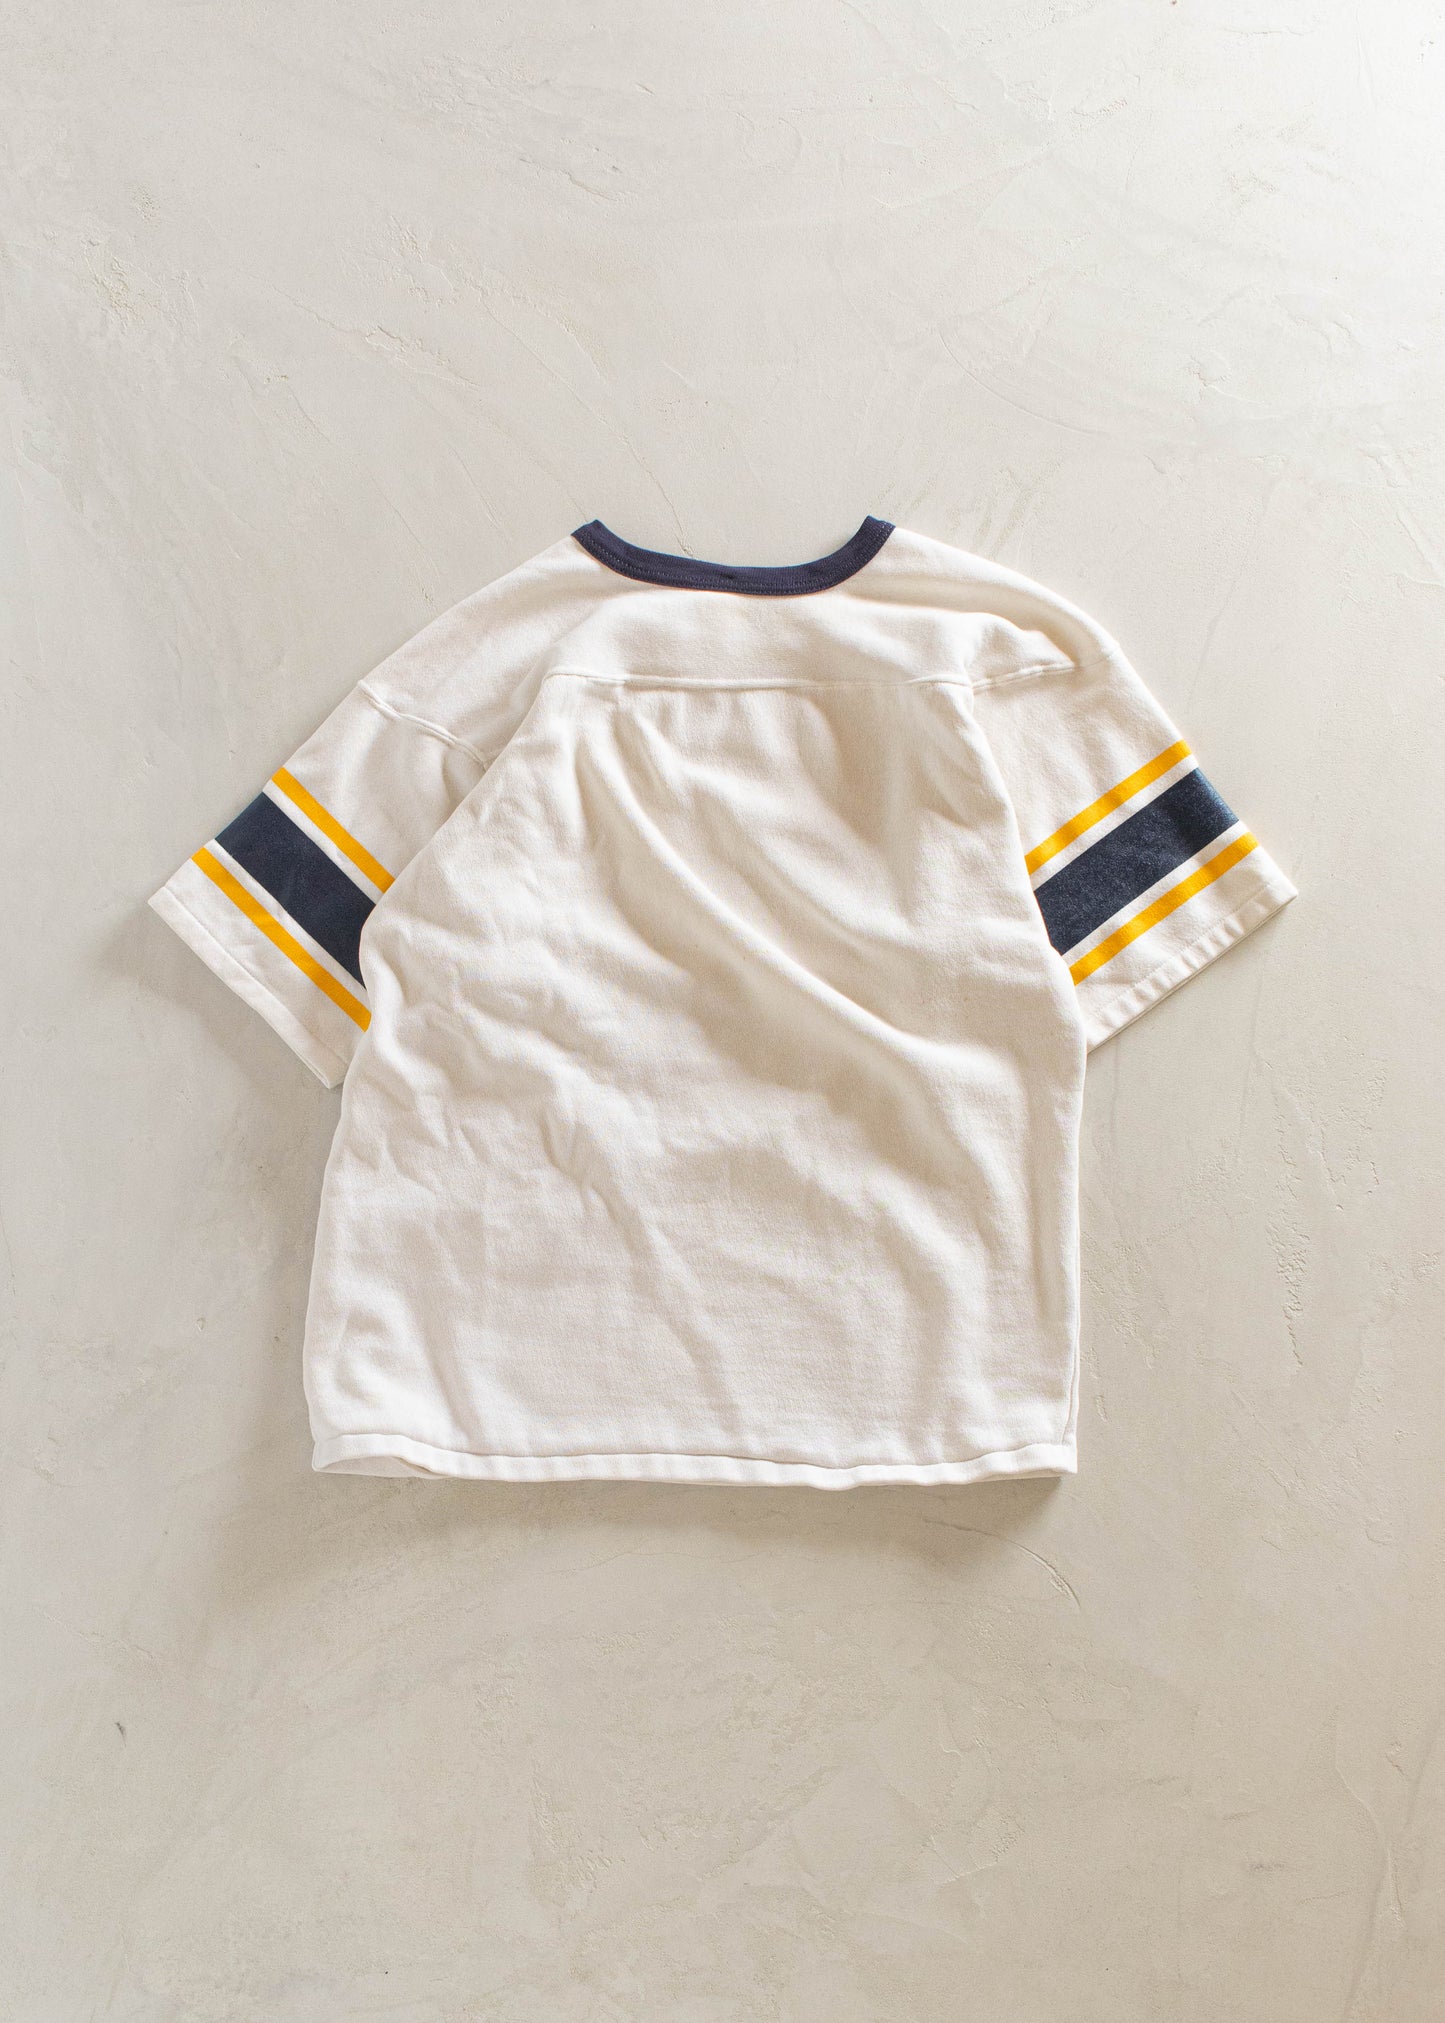 1980s Bike Michigan Wolverines Shortsleeve Sweatshirt Jersey Size M/L